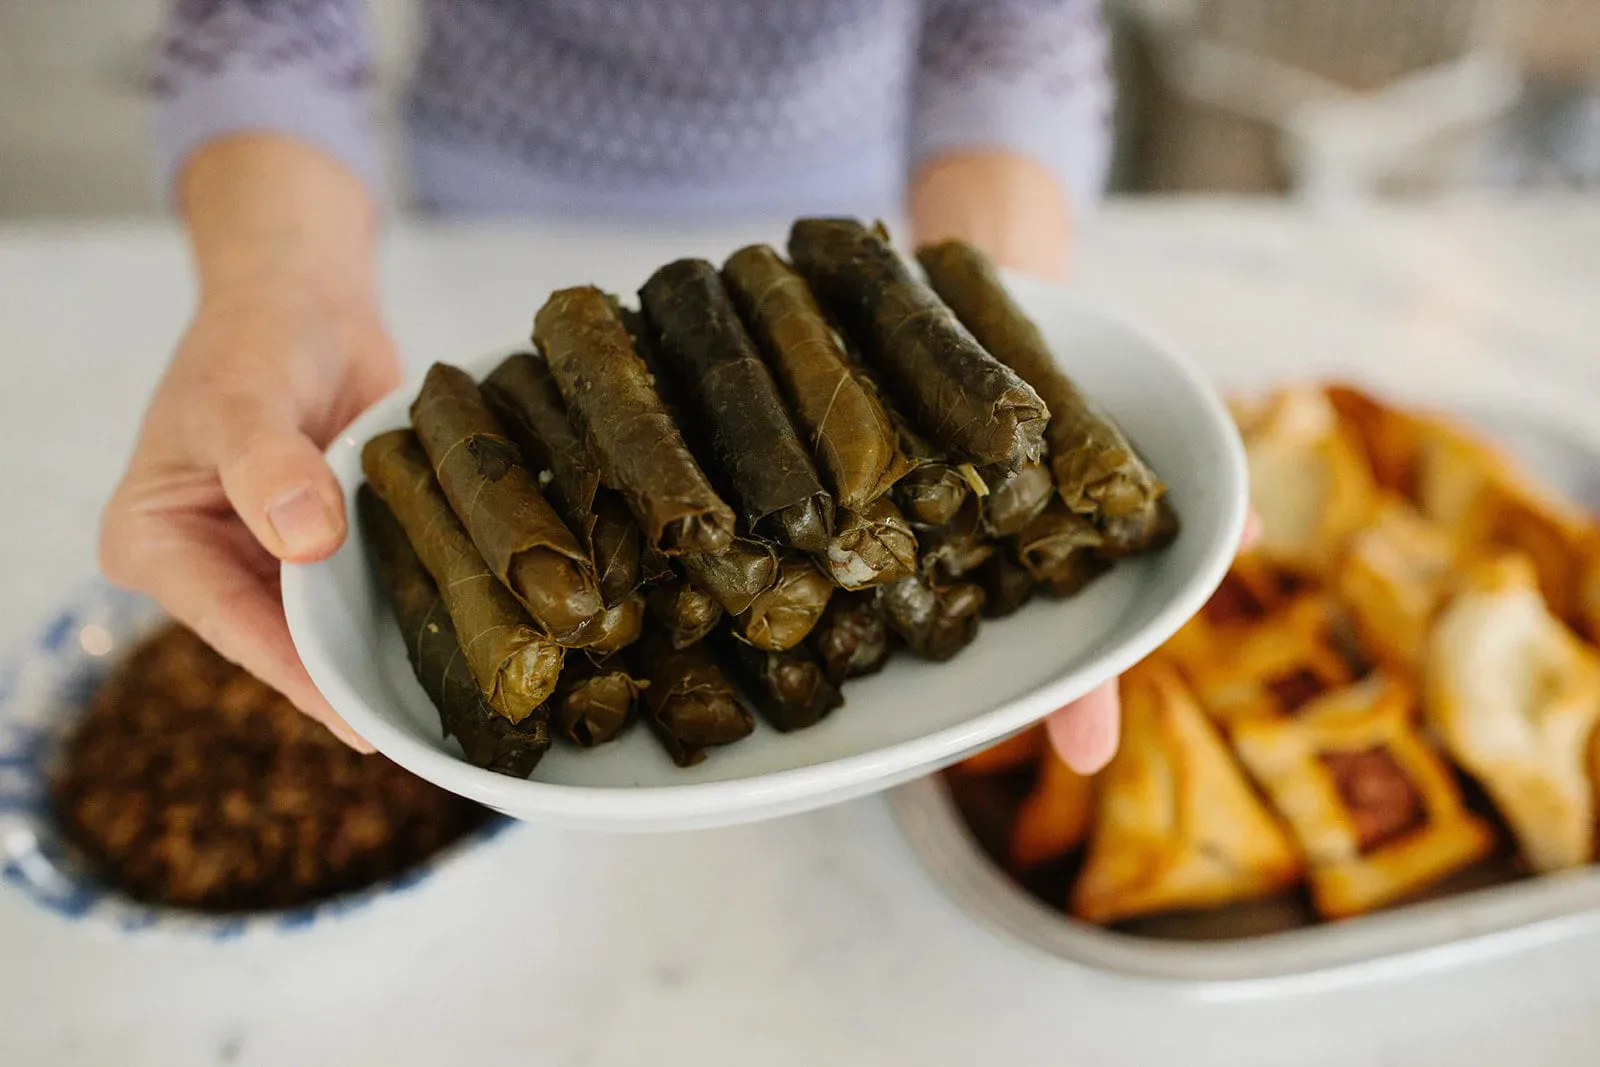 Lebanese Zaatar (Homemade) + Video - Silk Road Recipes